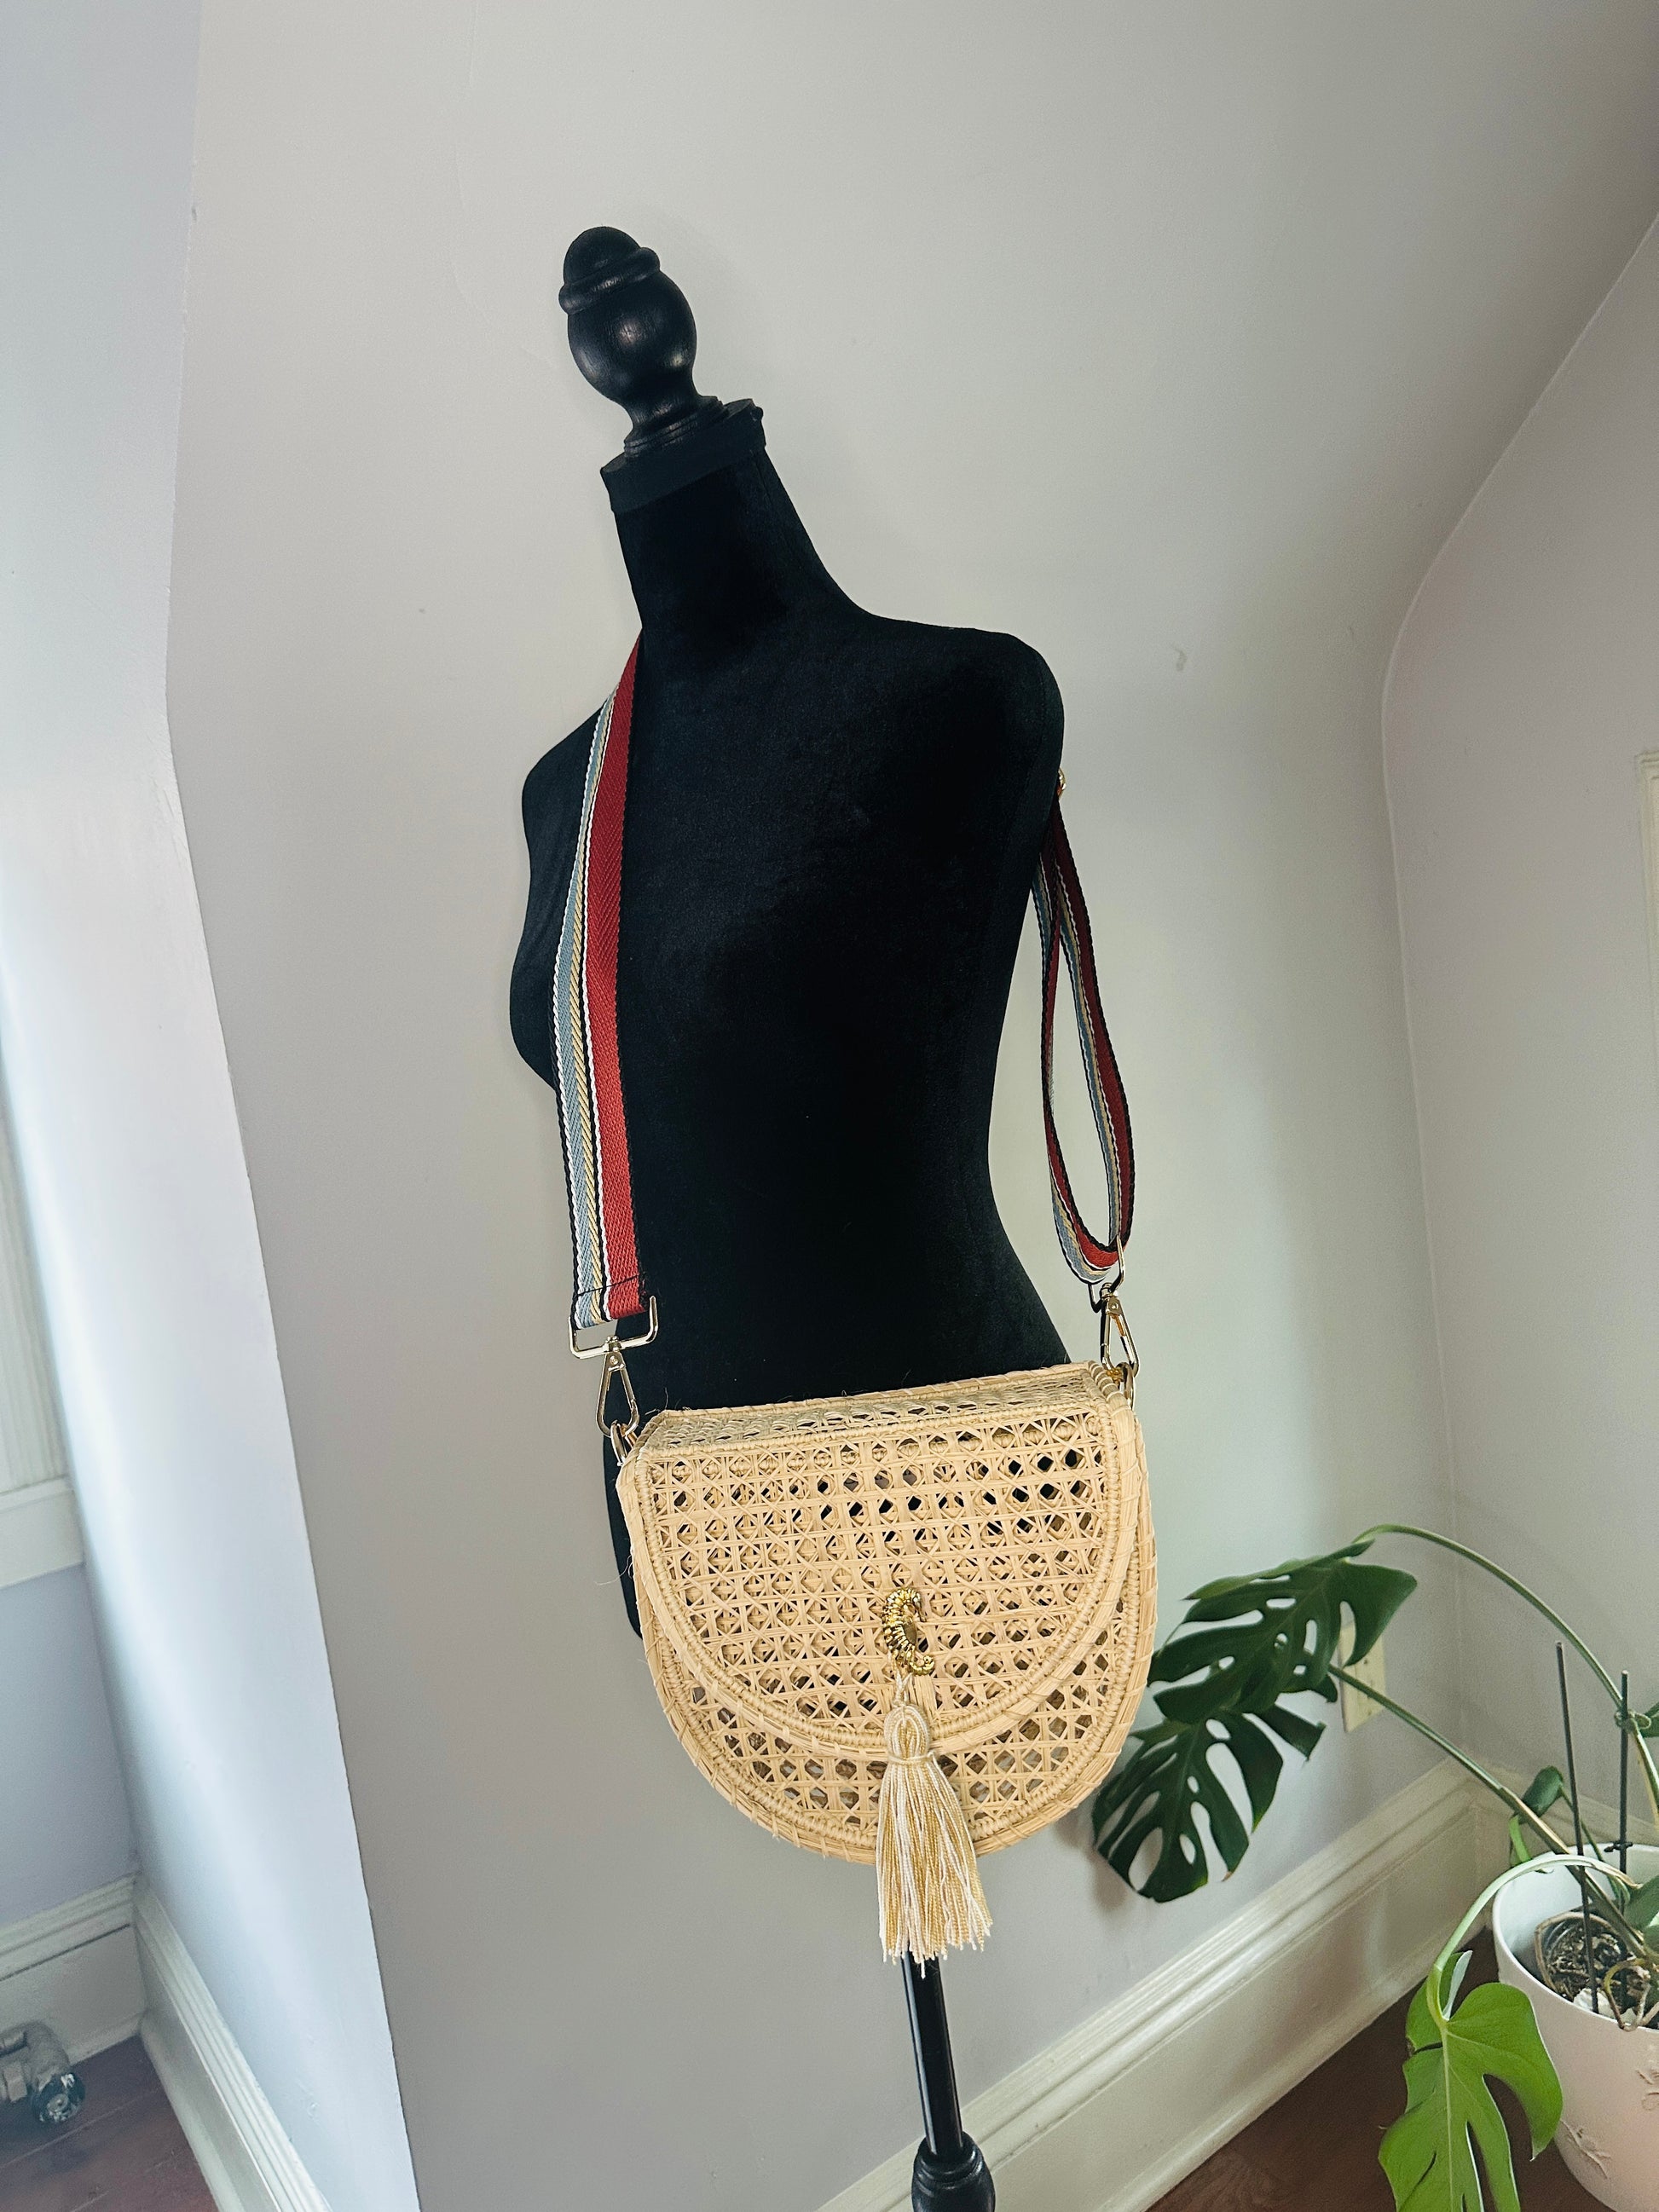 Palm Straw Crossbody Bag with Guitar Strap, Beige/ White Tassel